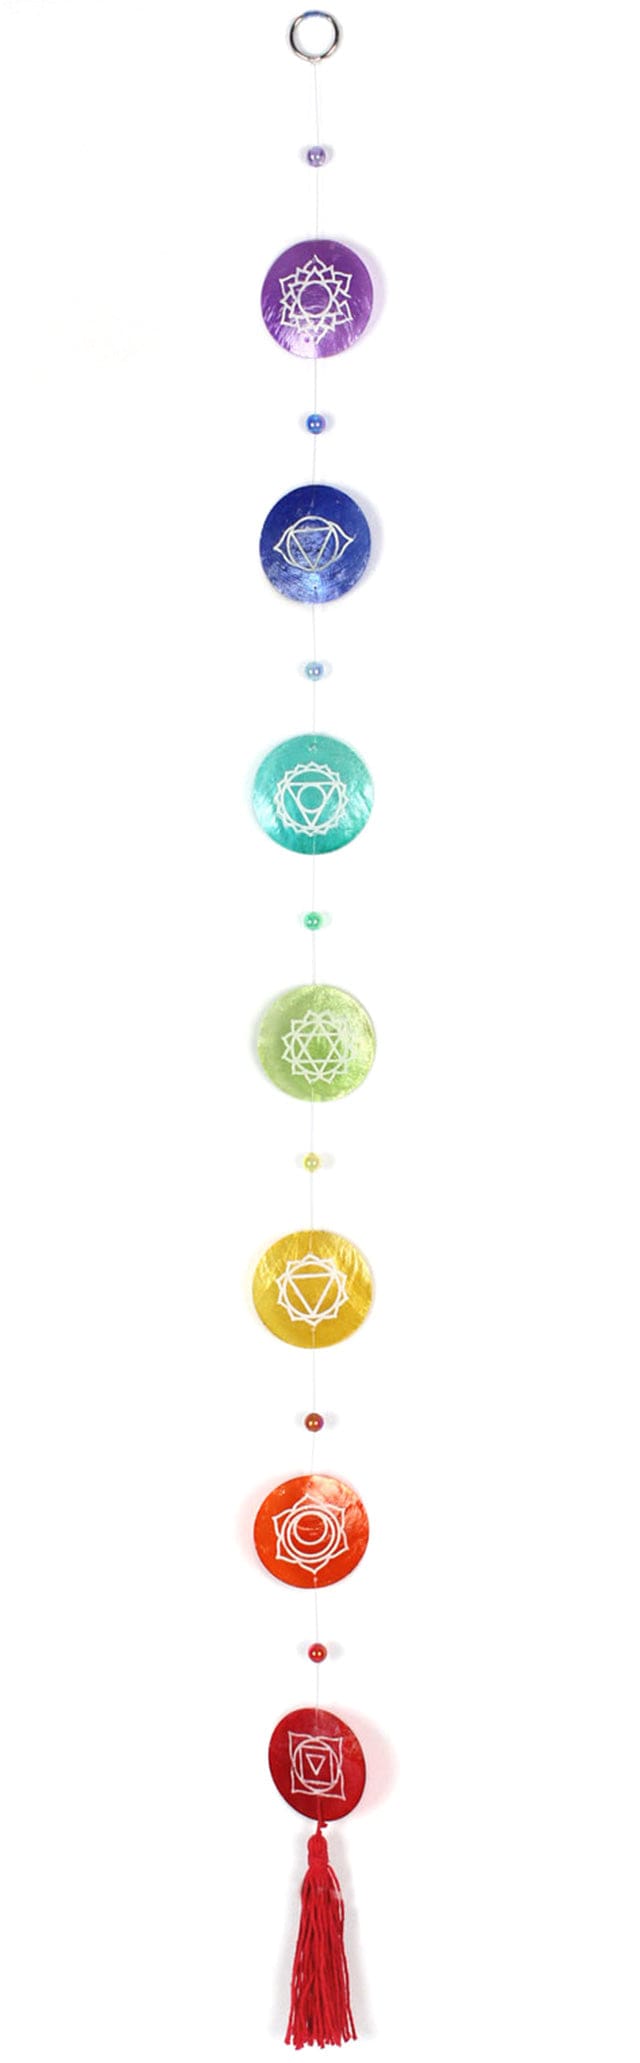 Capiz Shell String With Chakra Symbols